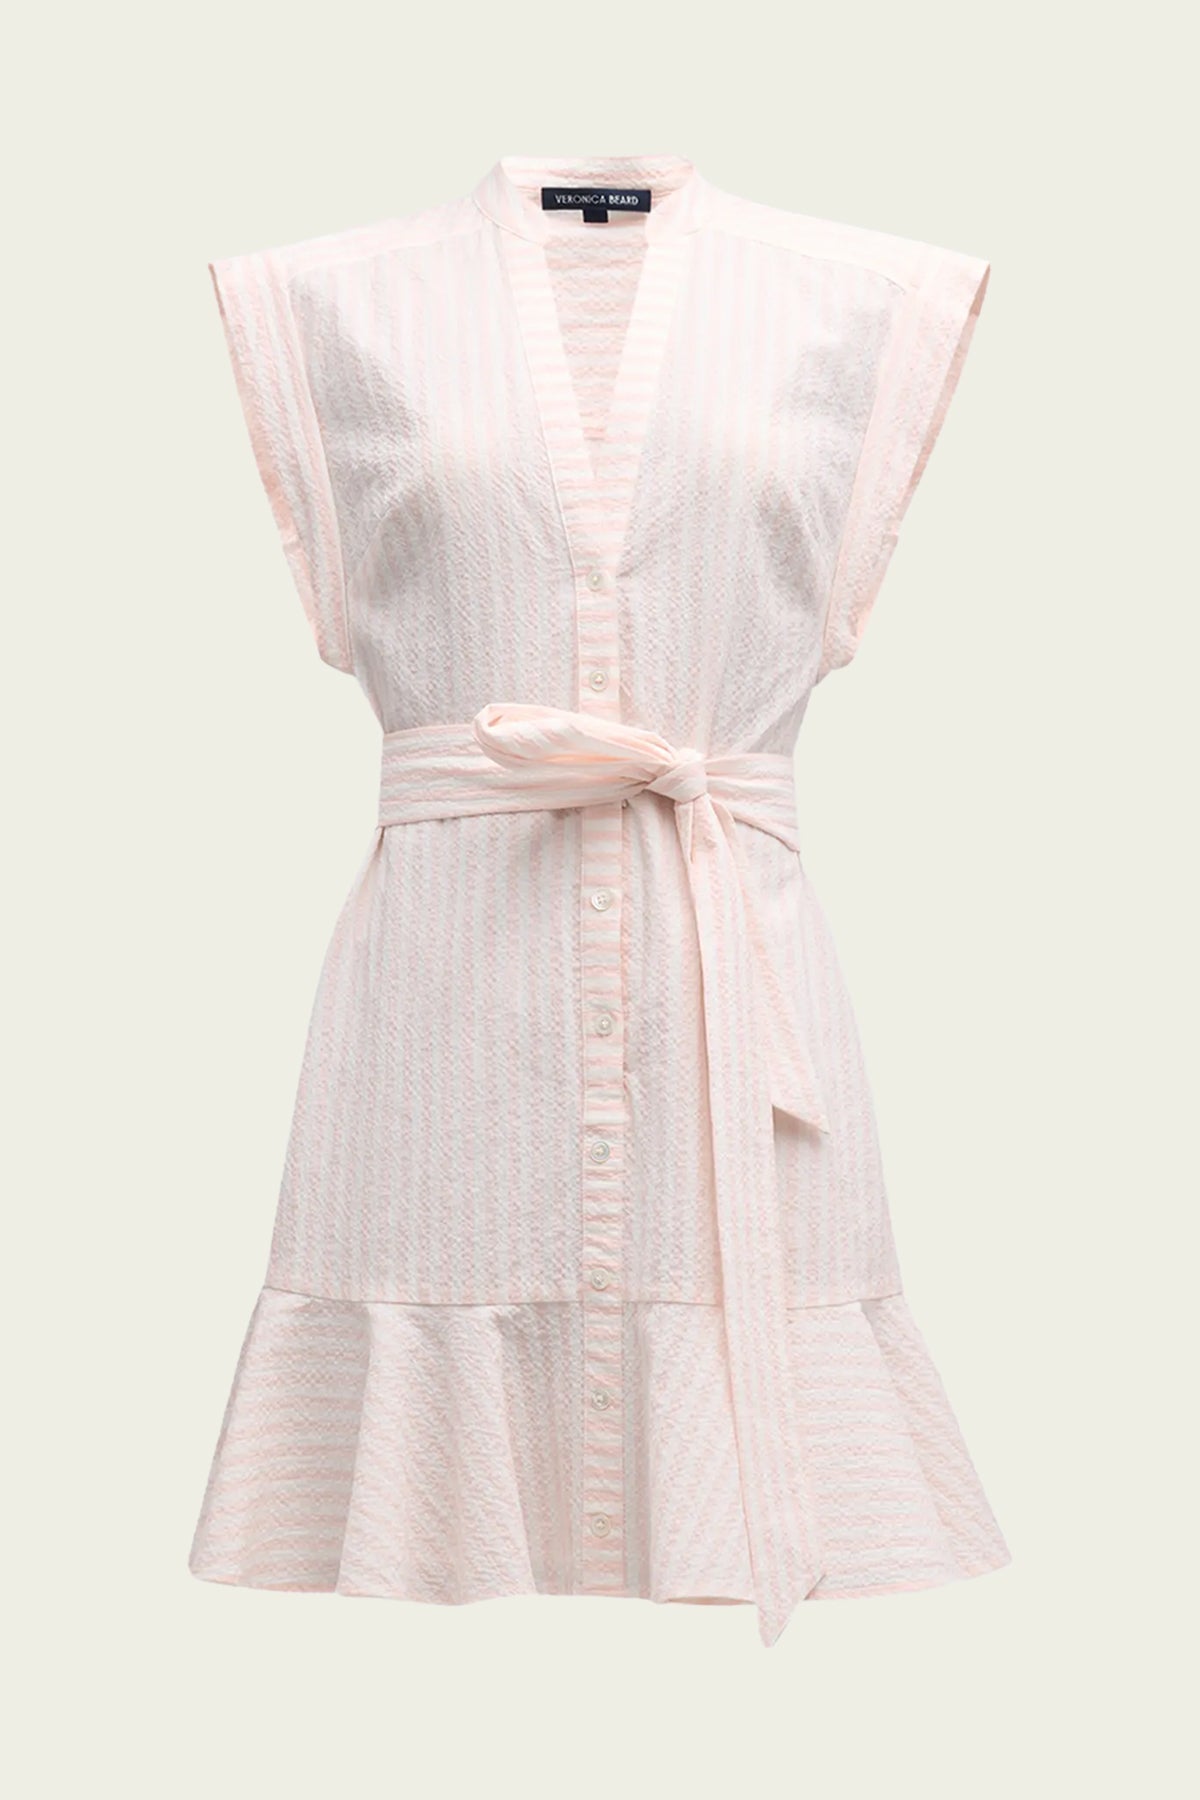 Avella Mini Dress in Pink White - shop-olivia.com